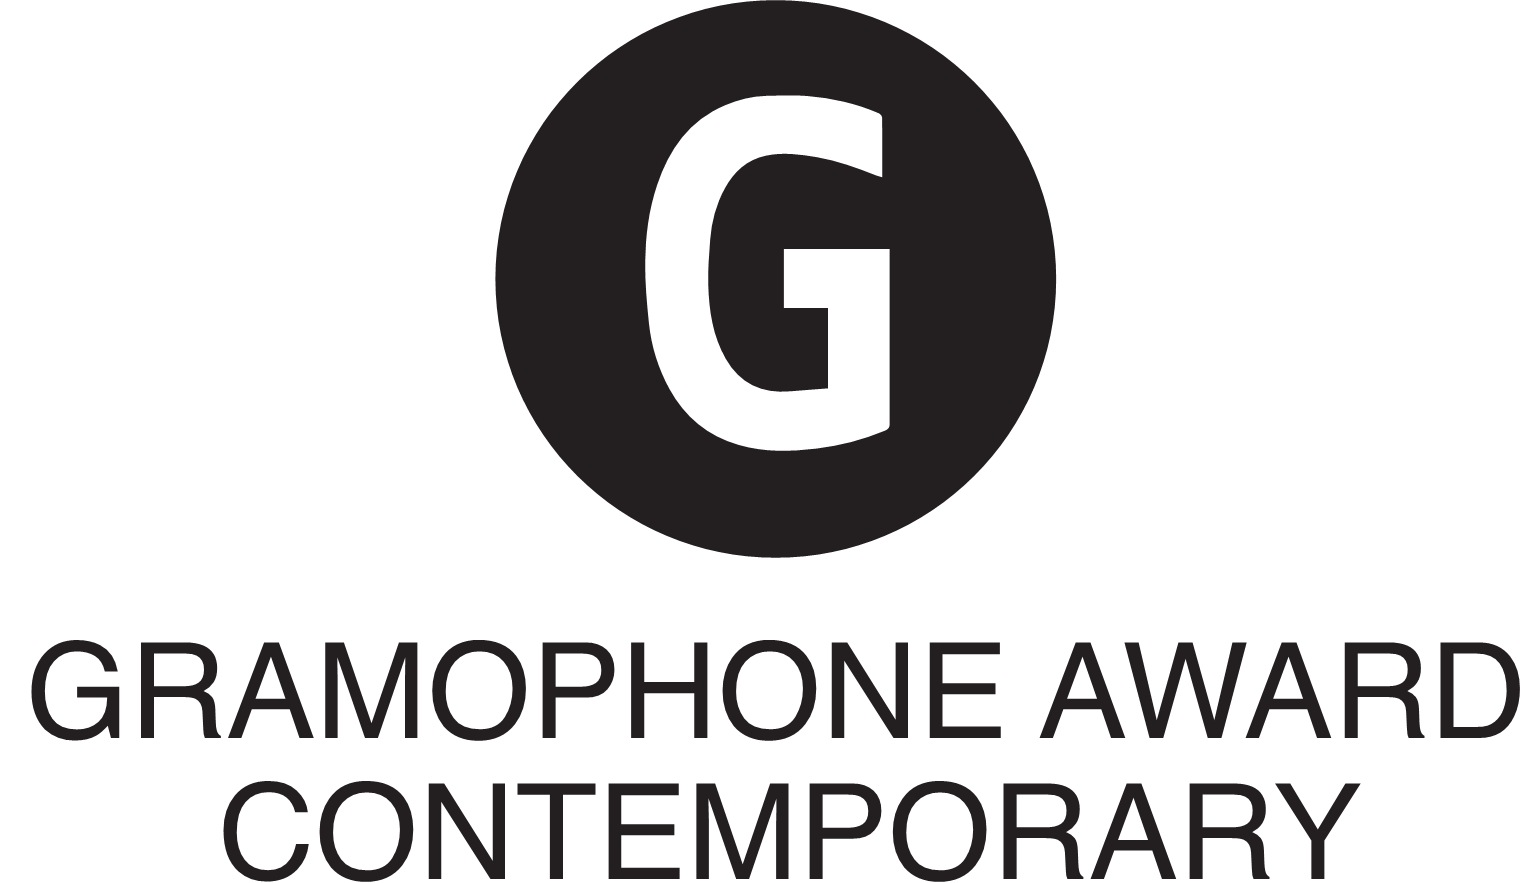 Gramophone Award: 'Contemporary' (2019)